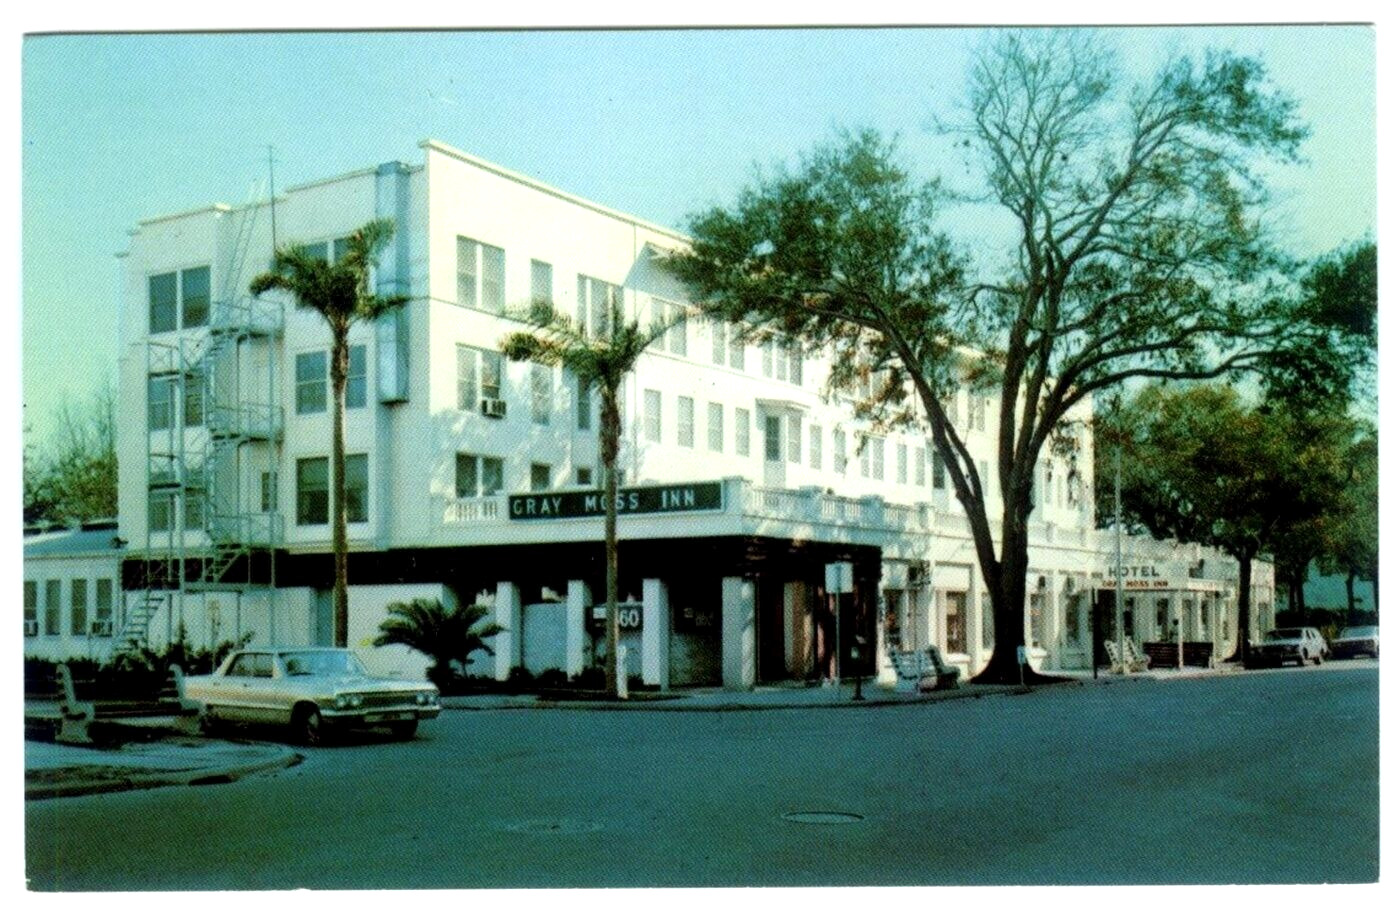 Clearwater Florida FL Gray Moss Inn Vintage Postcard